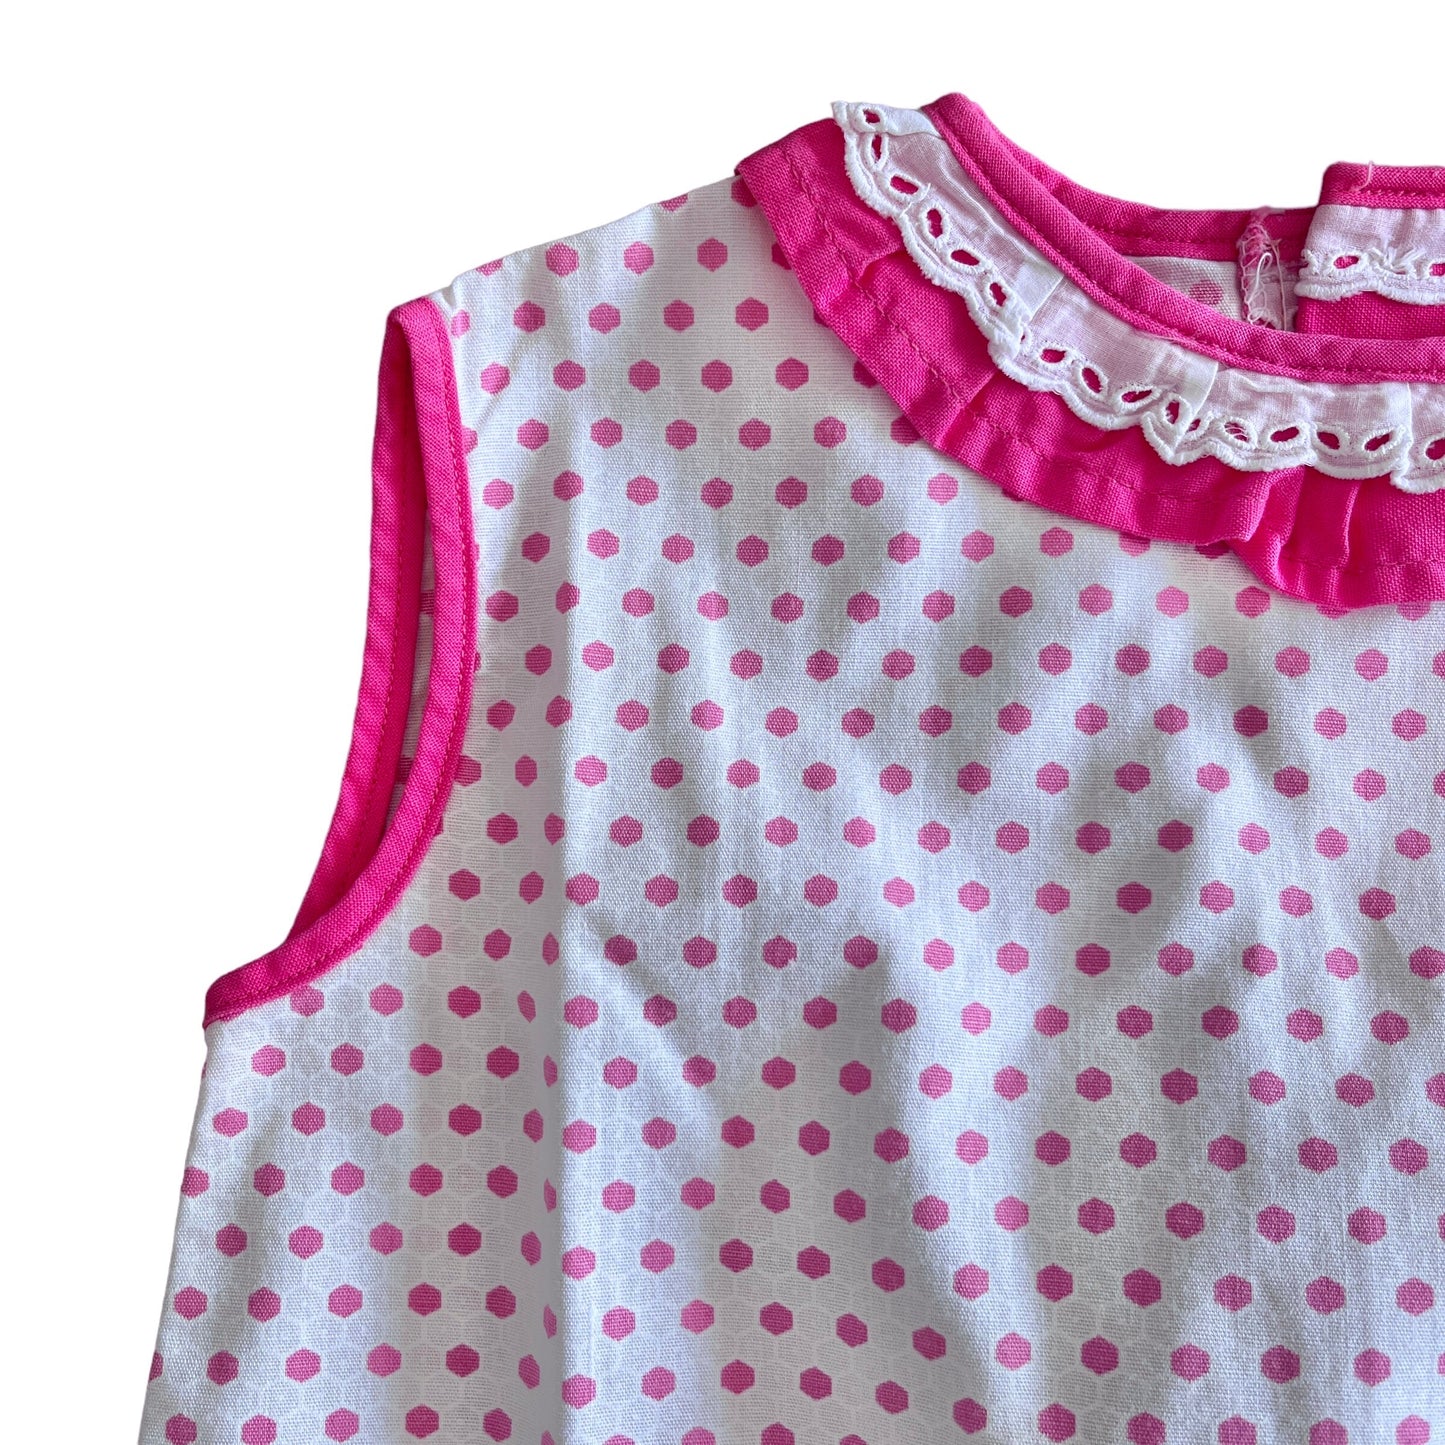 Vintage 1960s Pink Dots Mod Dress 9-12M